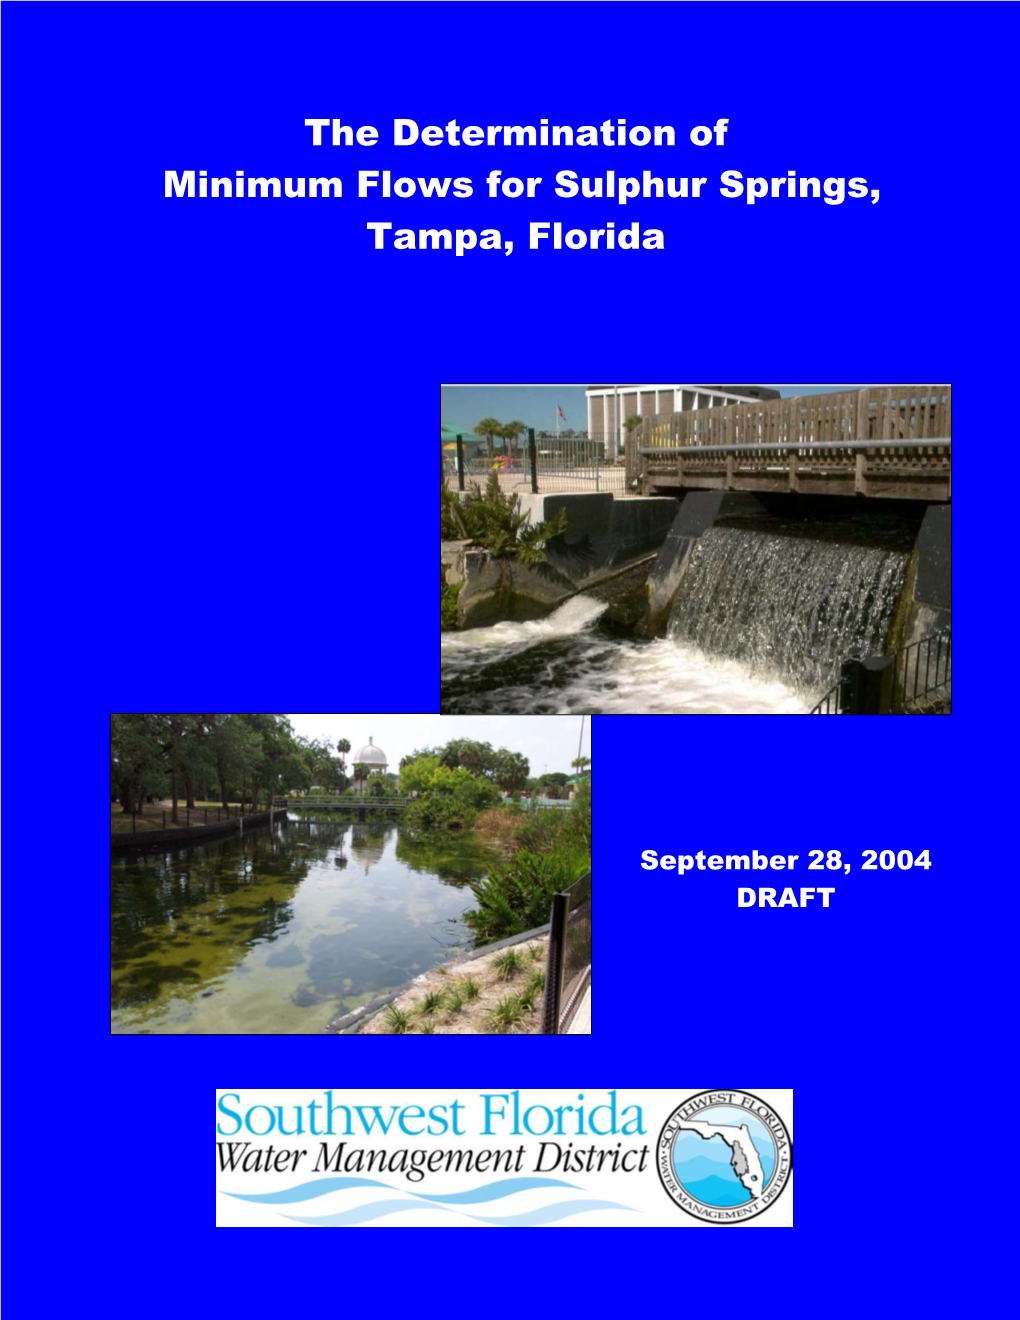 The Determination of Minimum Flows for Sulphur Springs, Tampa, Florida